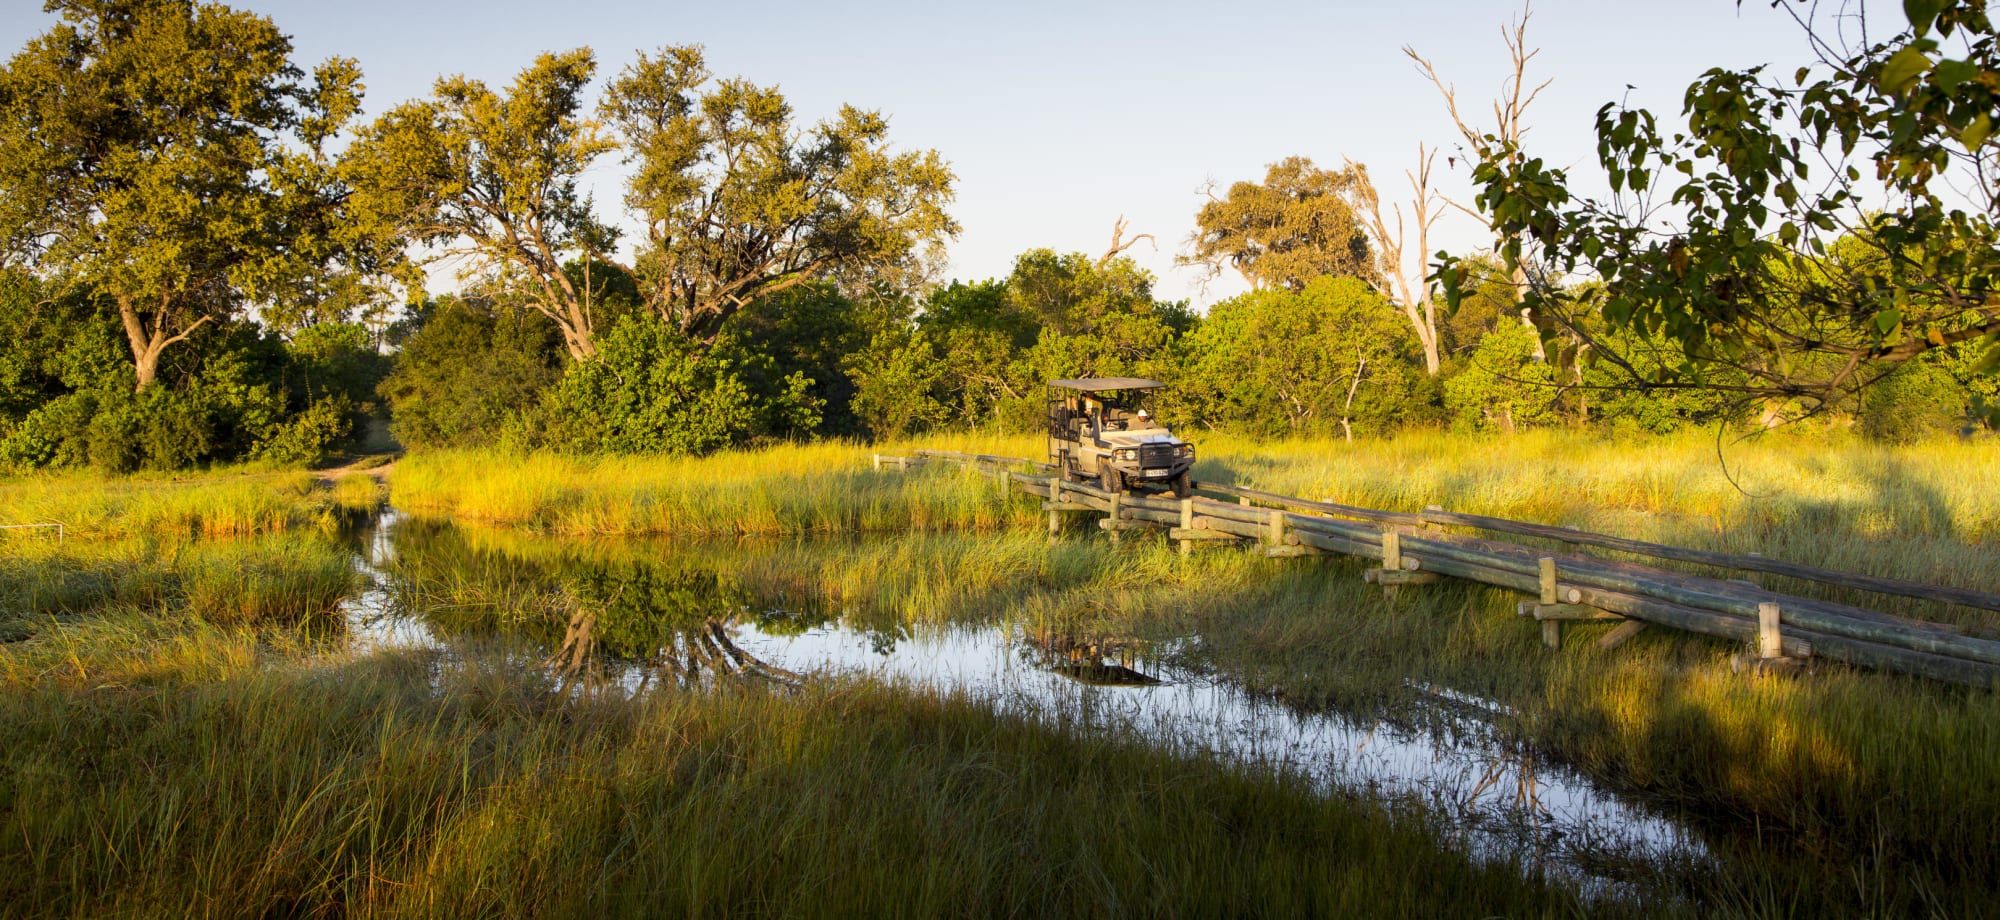 Little_Sable_Camp_Khwai_Private_Reserve_Okavango_Delta_loj9qu